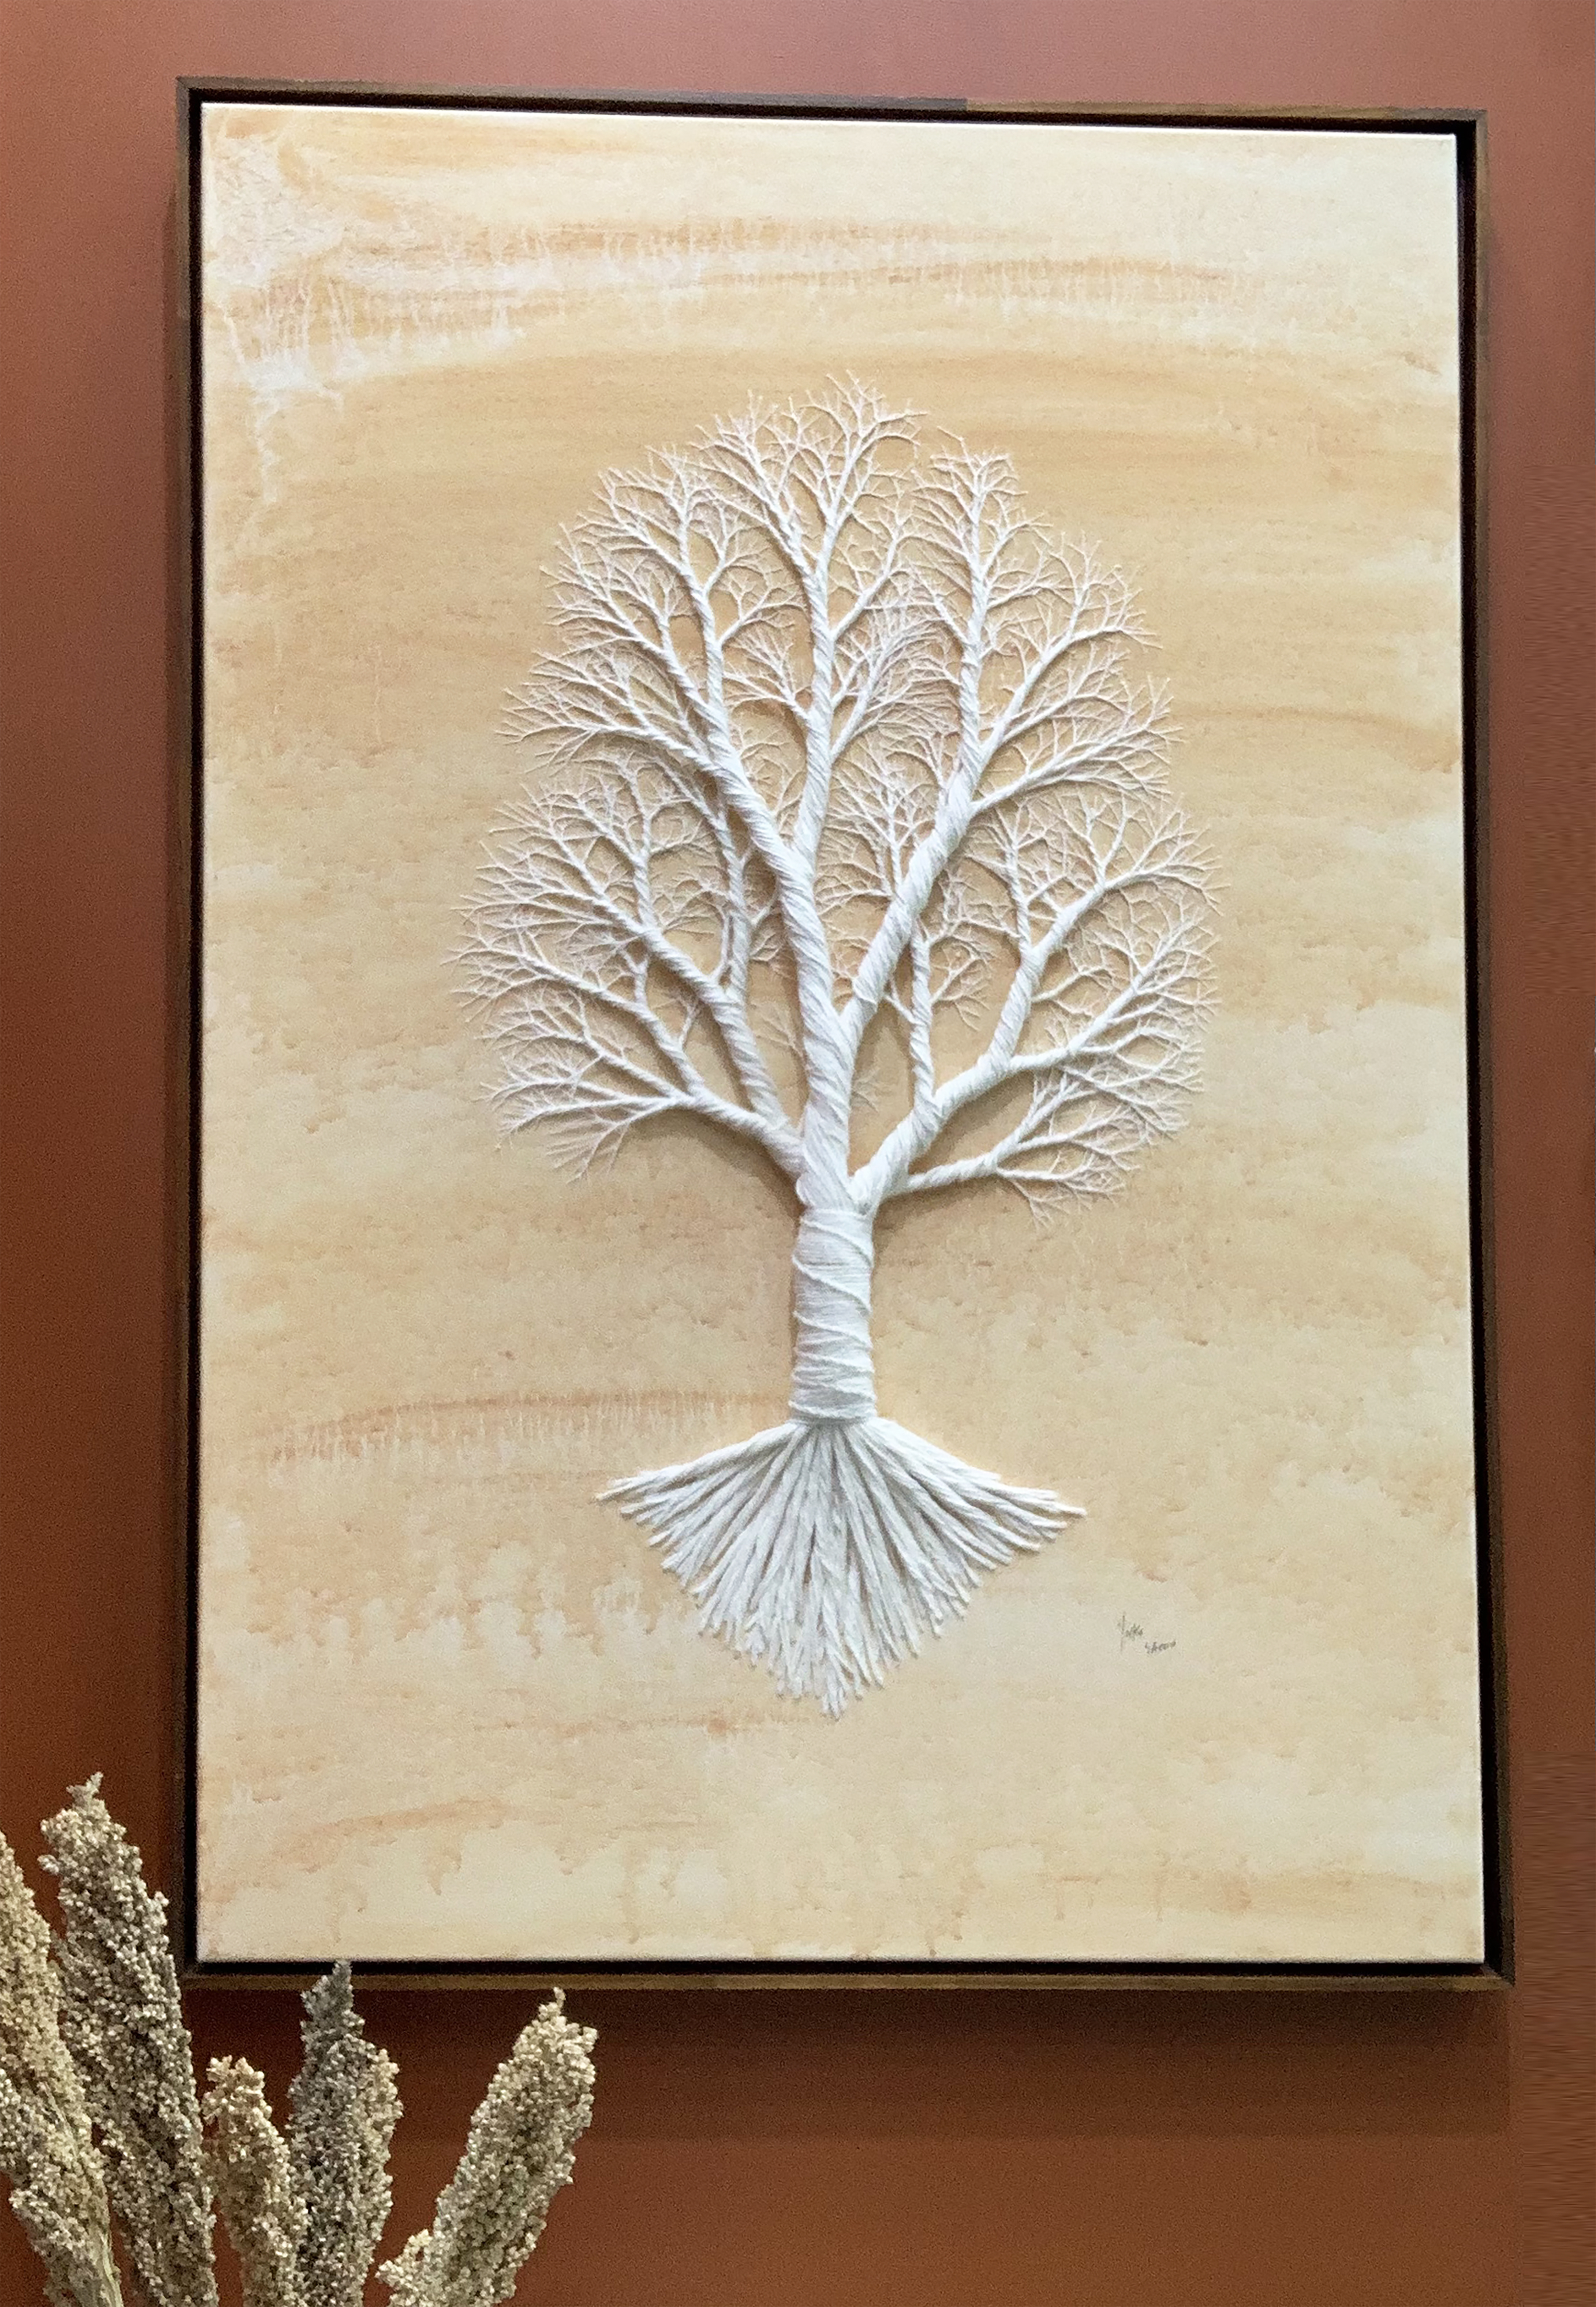 Quadro com árvore 3d de papel